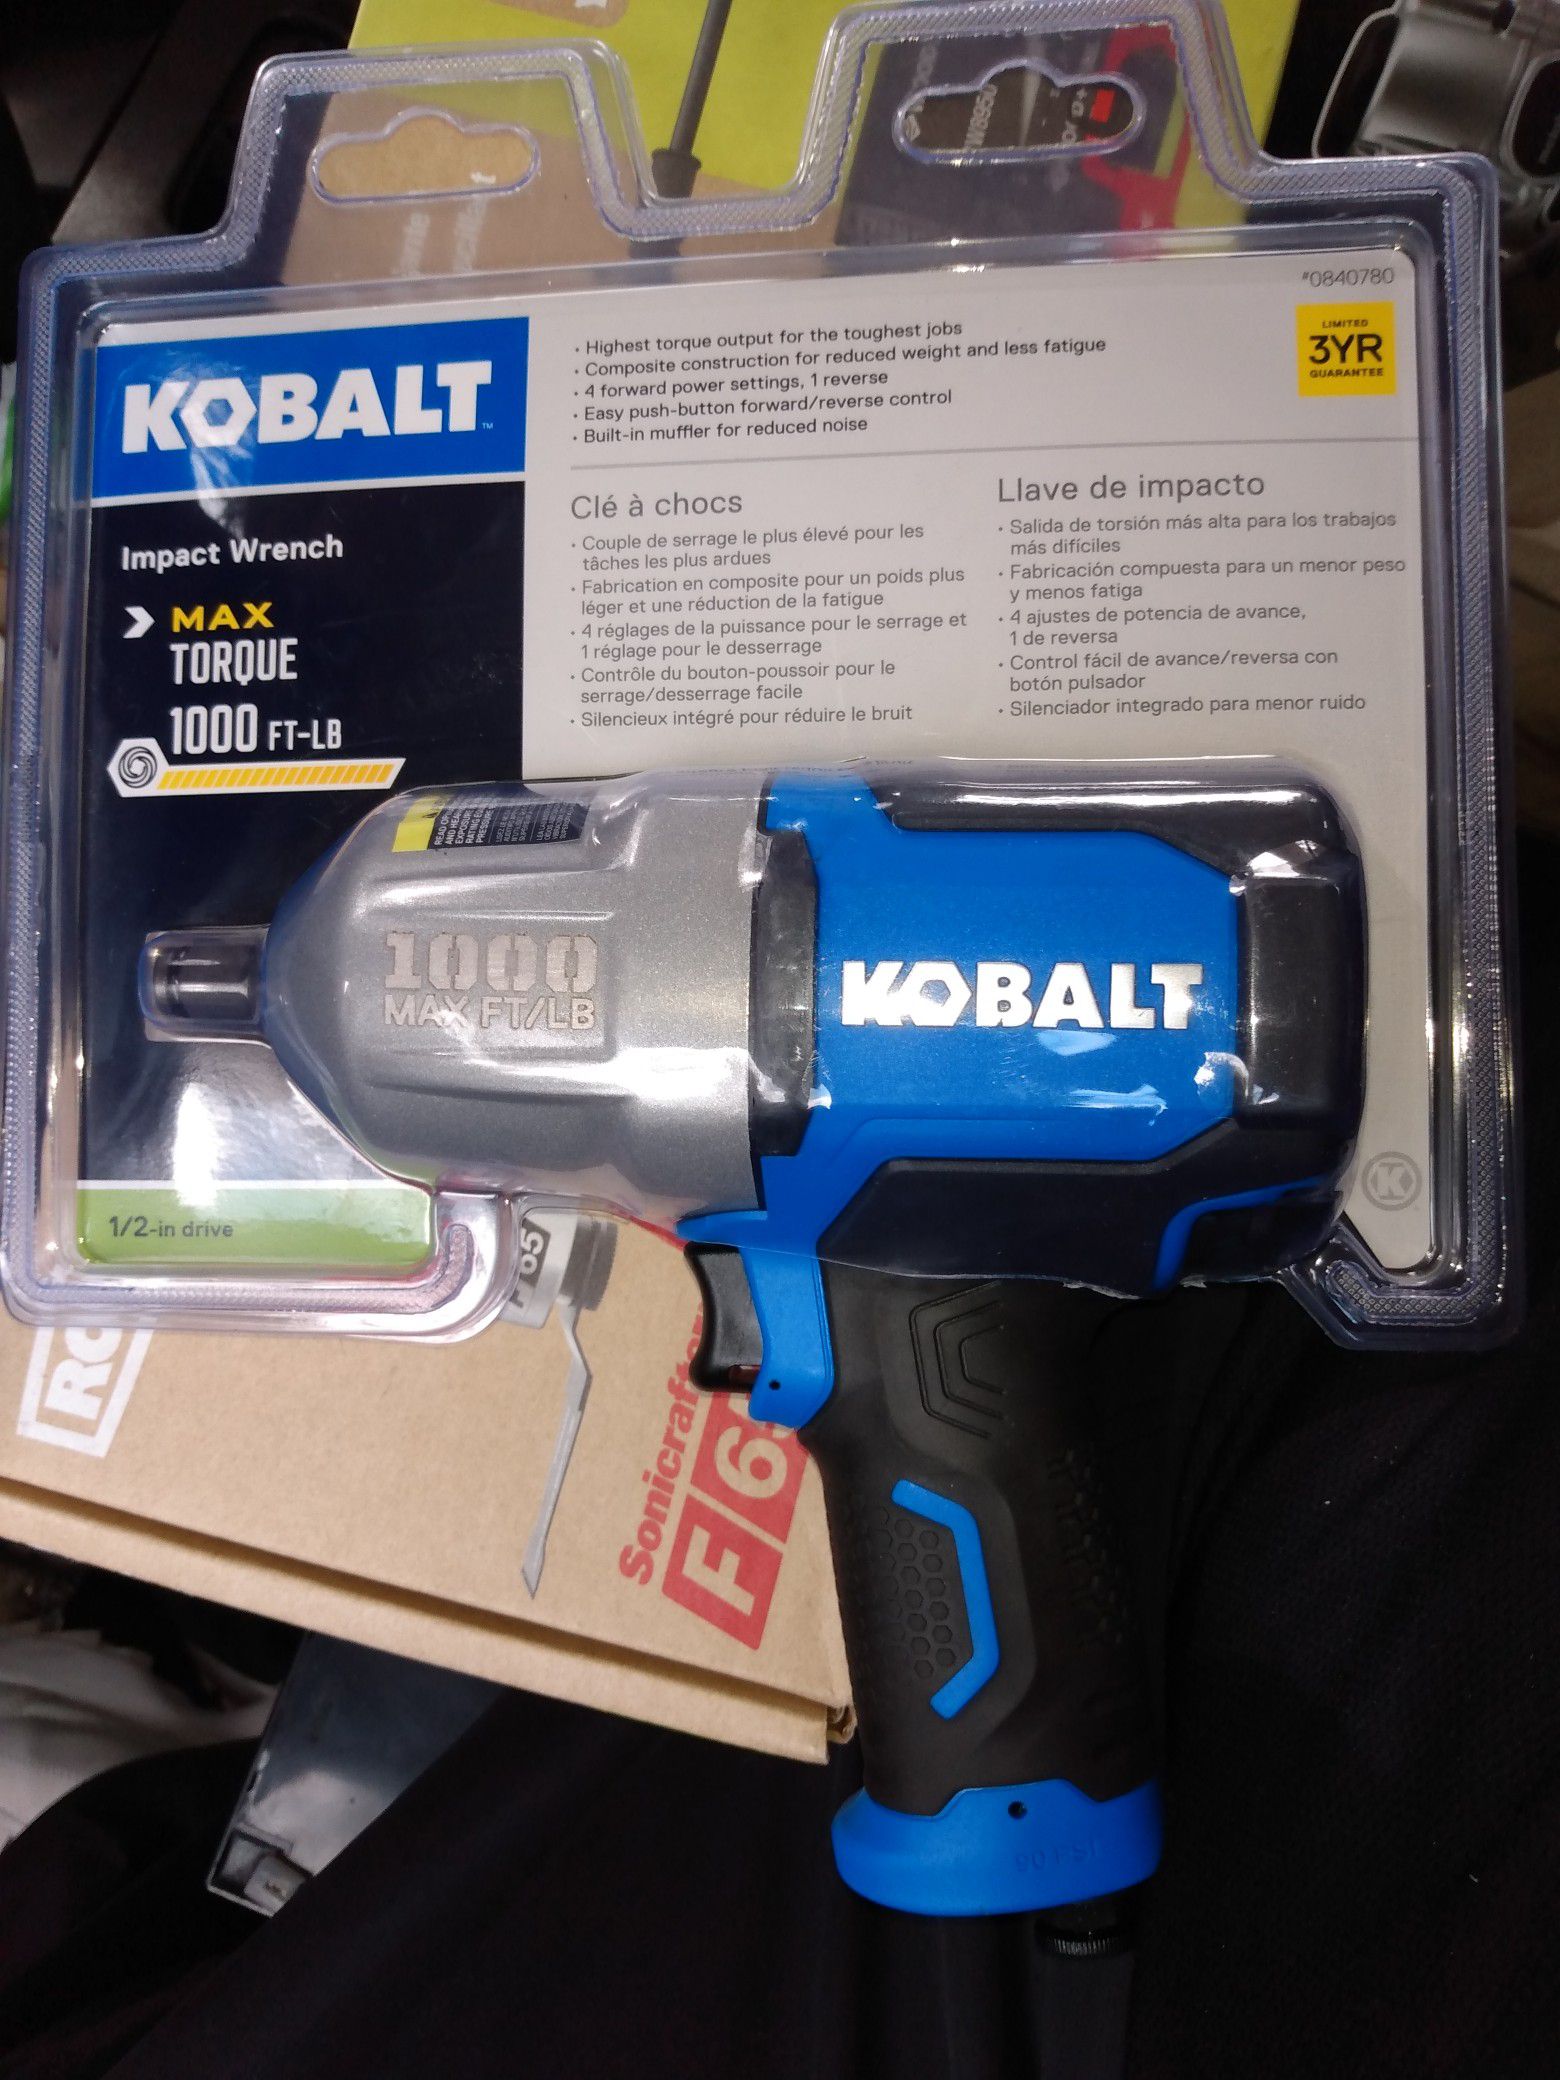 Kobalt Impact drill